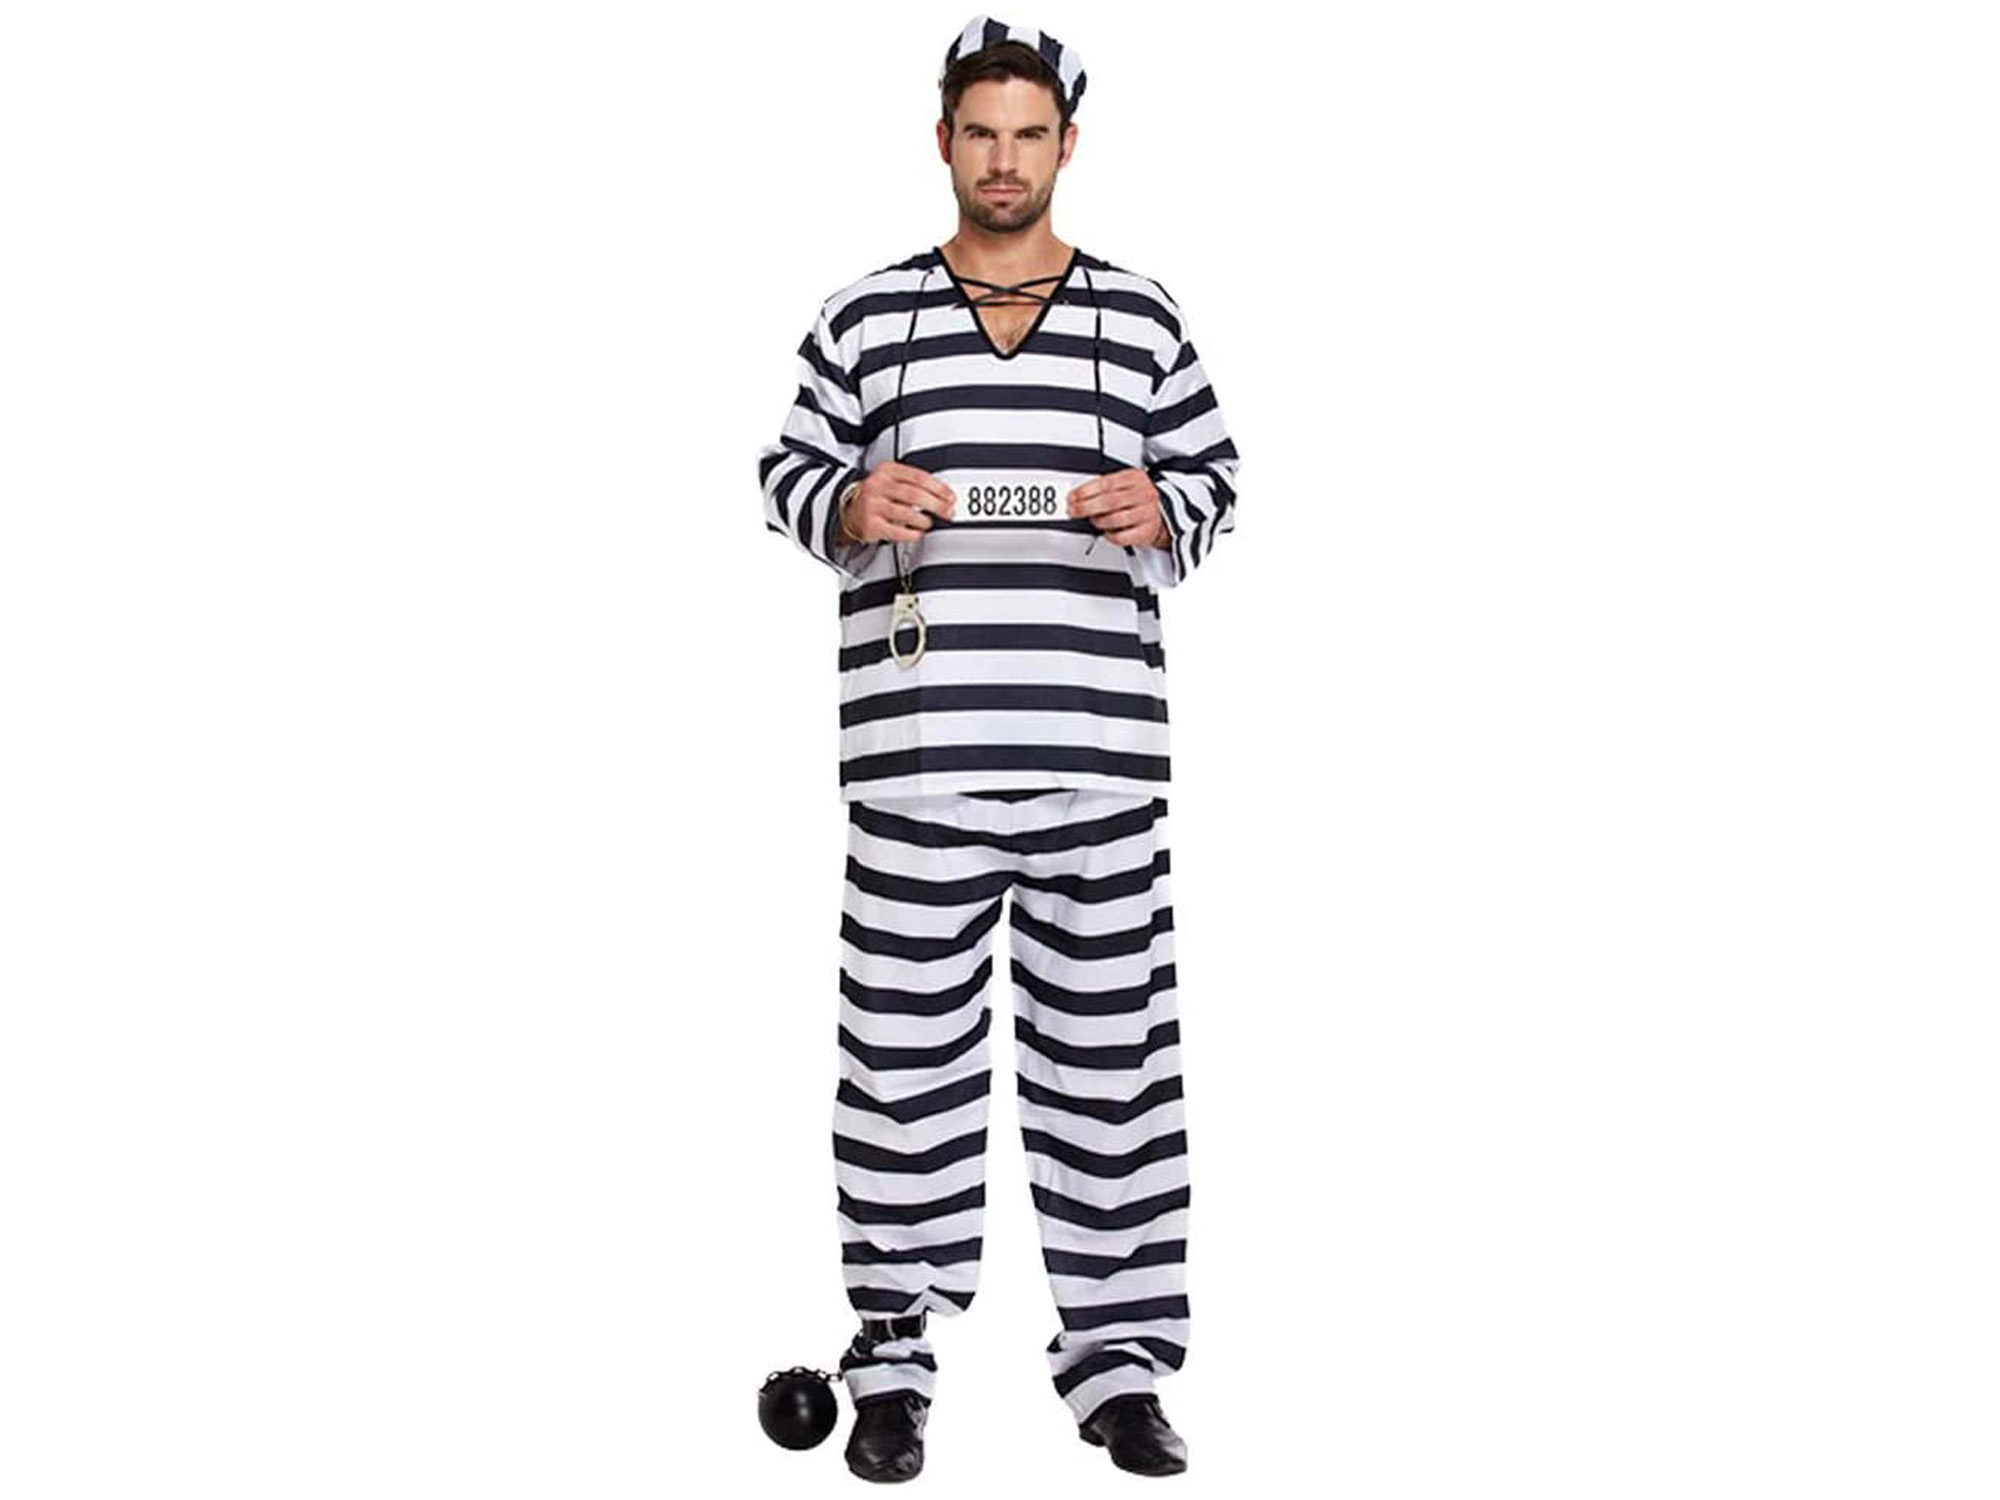 Black & White Convict Fancy Dress Costume - Amazon